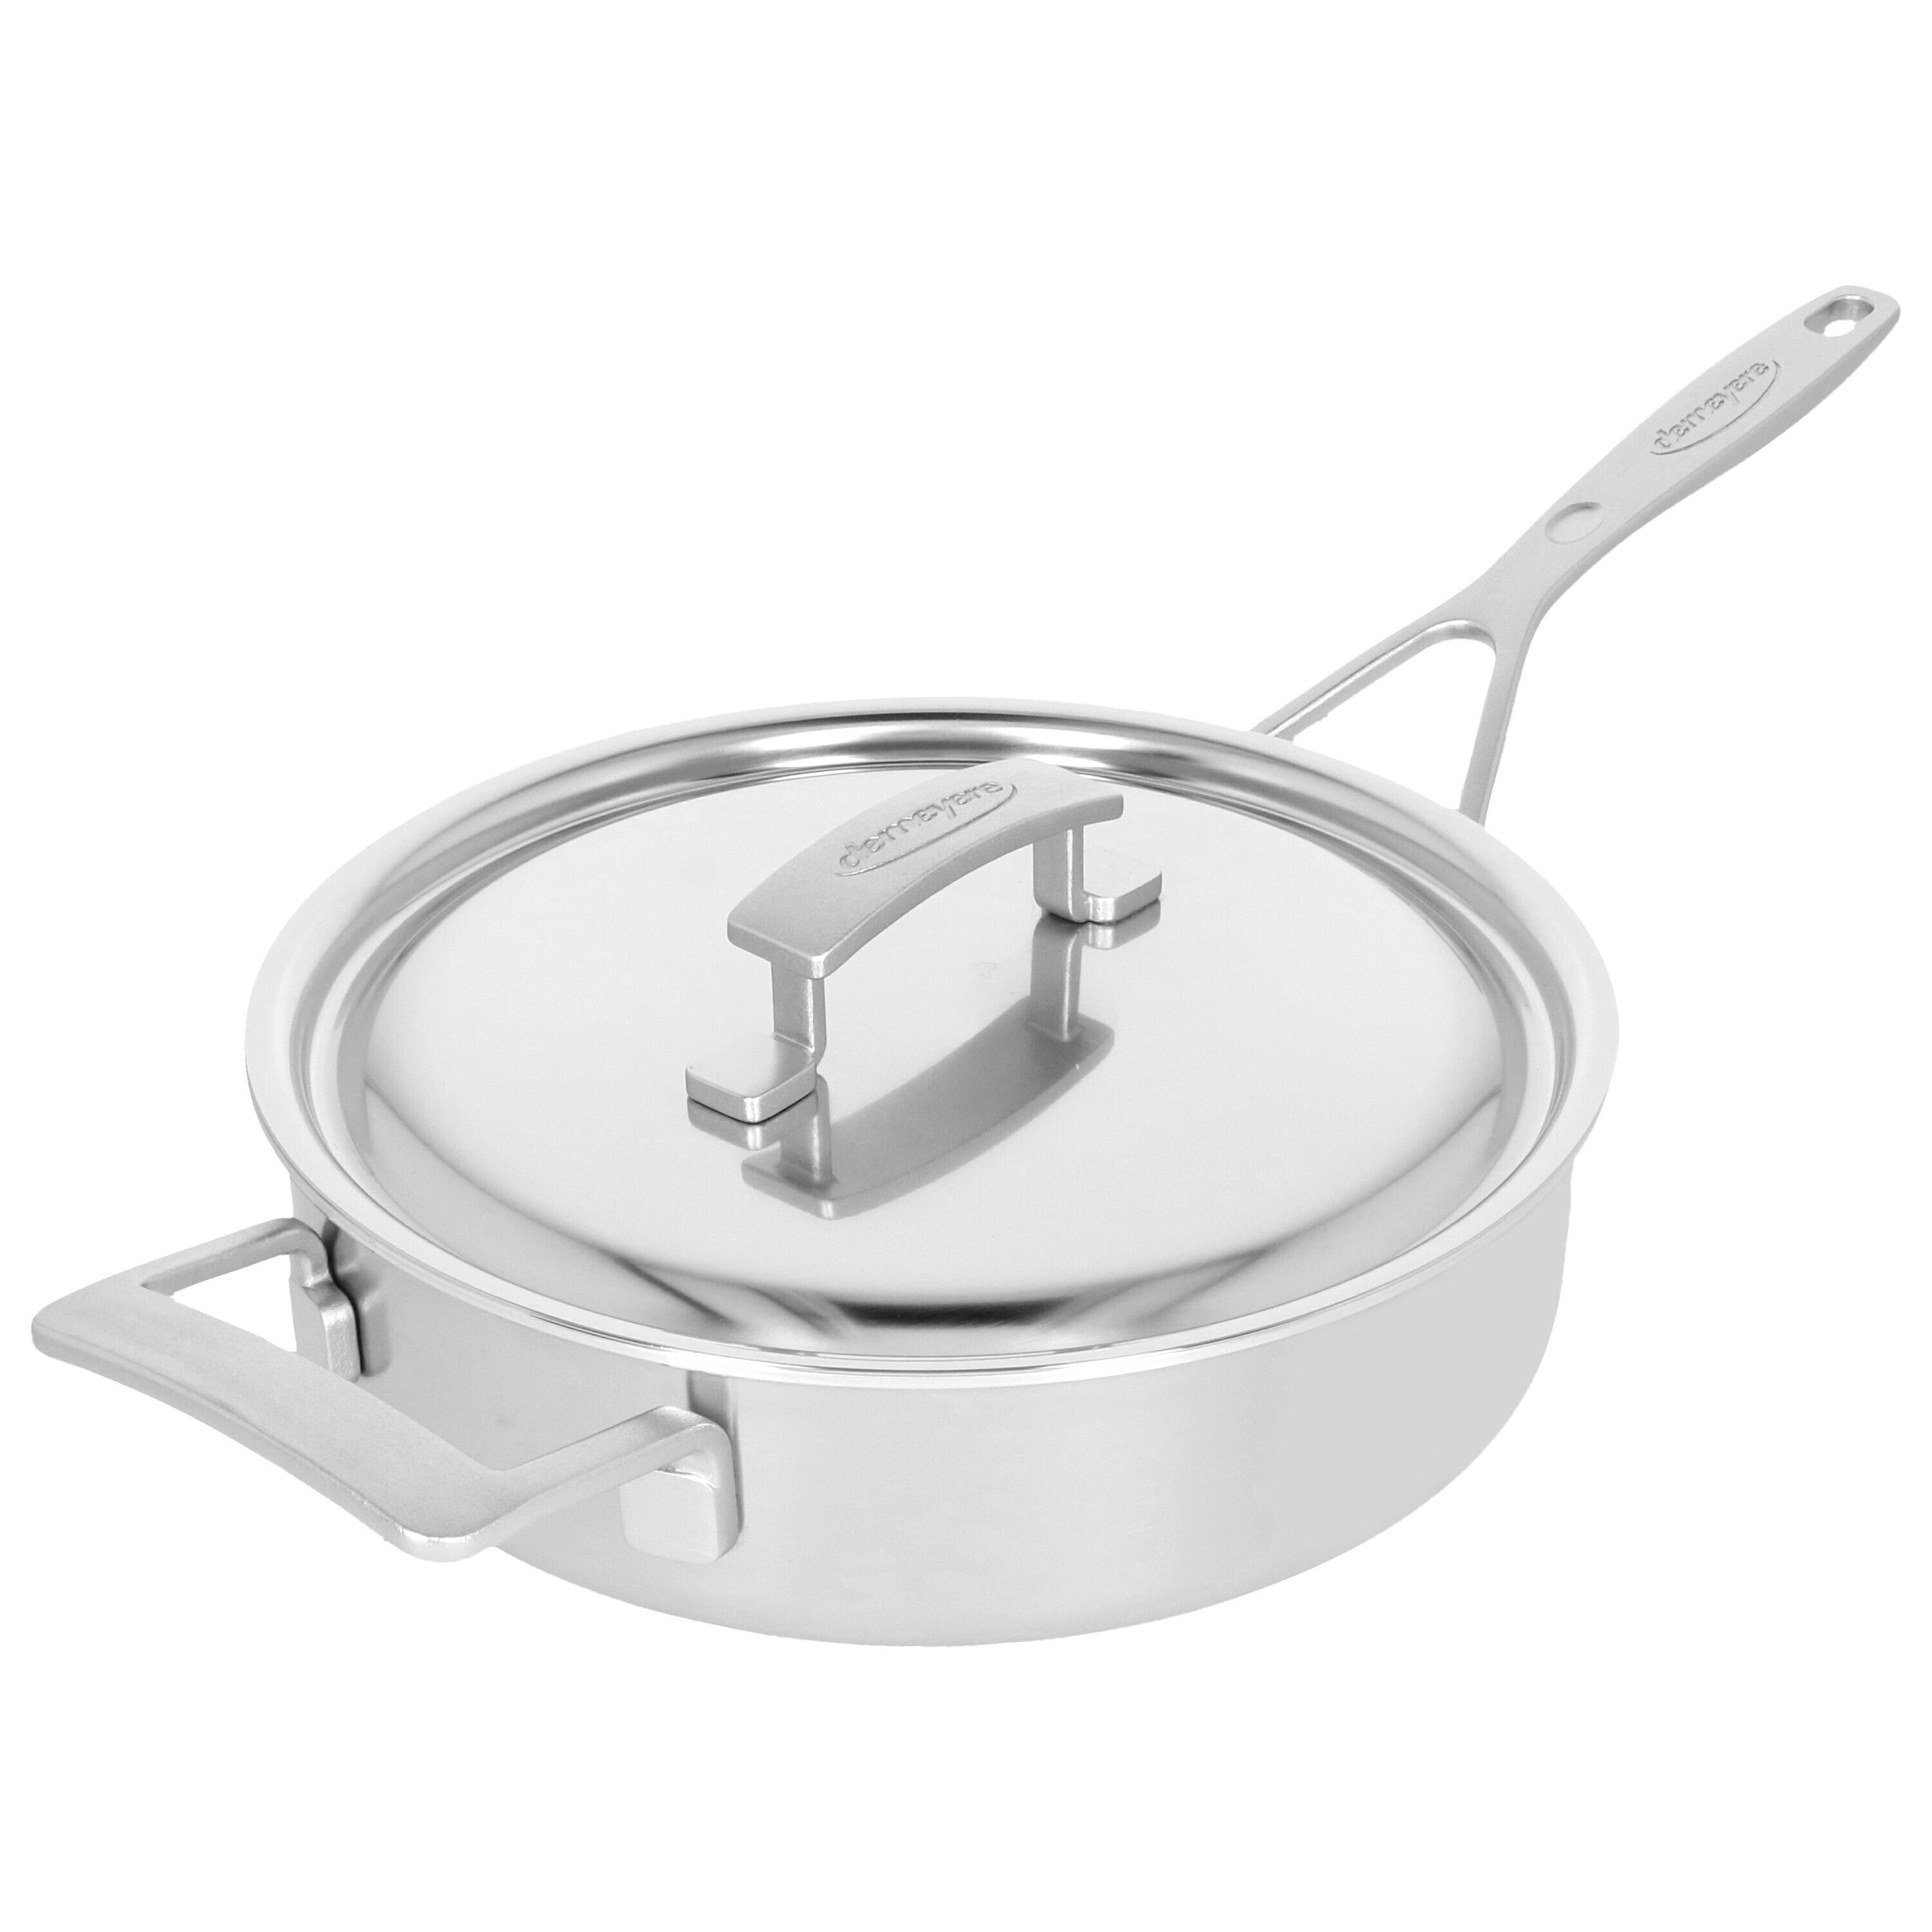 Demeyere Resto 3 Cm / Inch 18/10 Stainless Steel Frying Pan